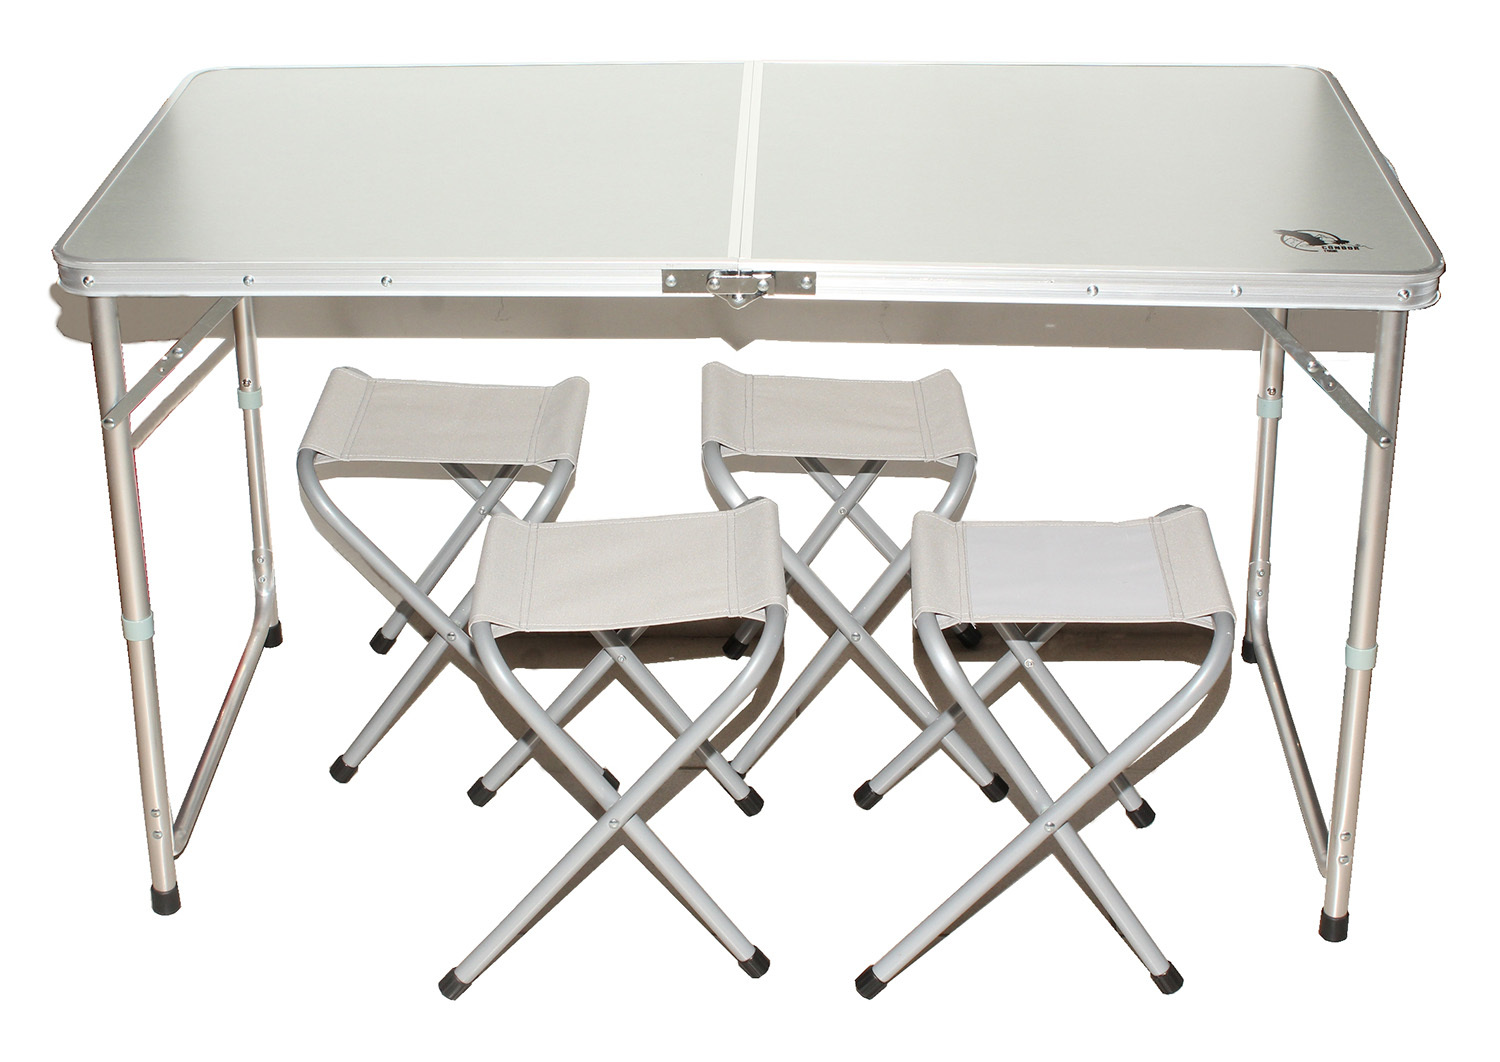 Стол складной ytft016 серый, 80х60х70 см